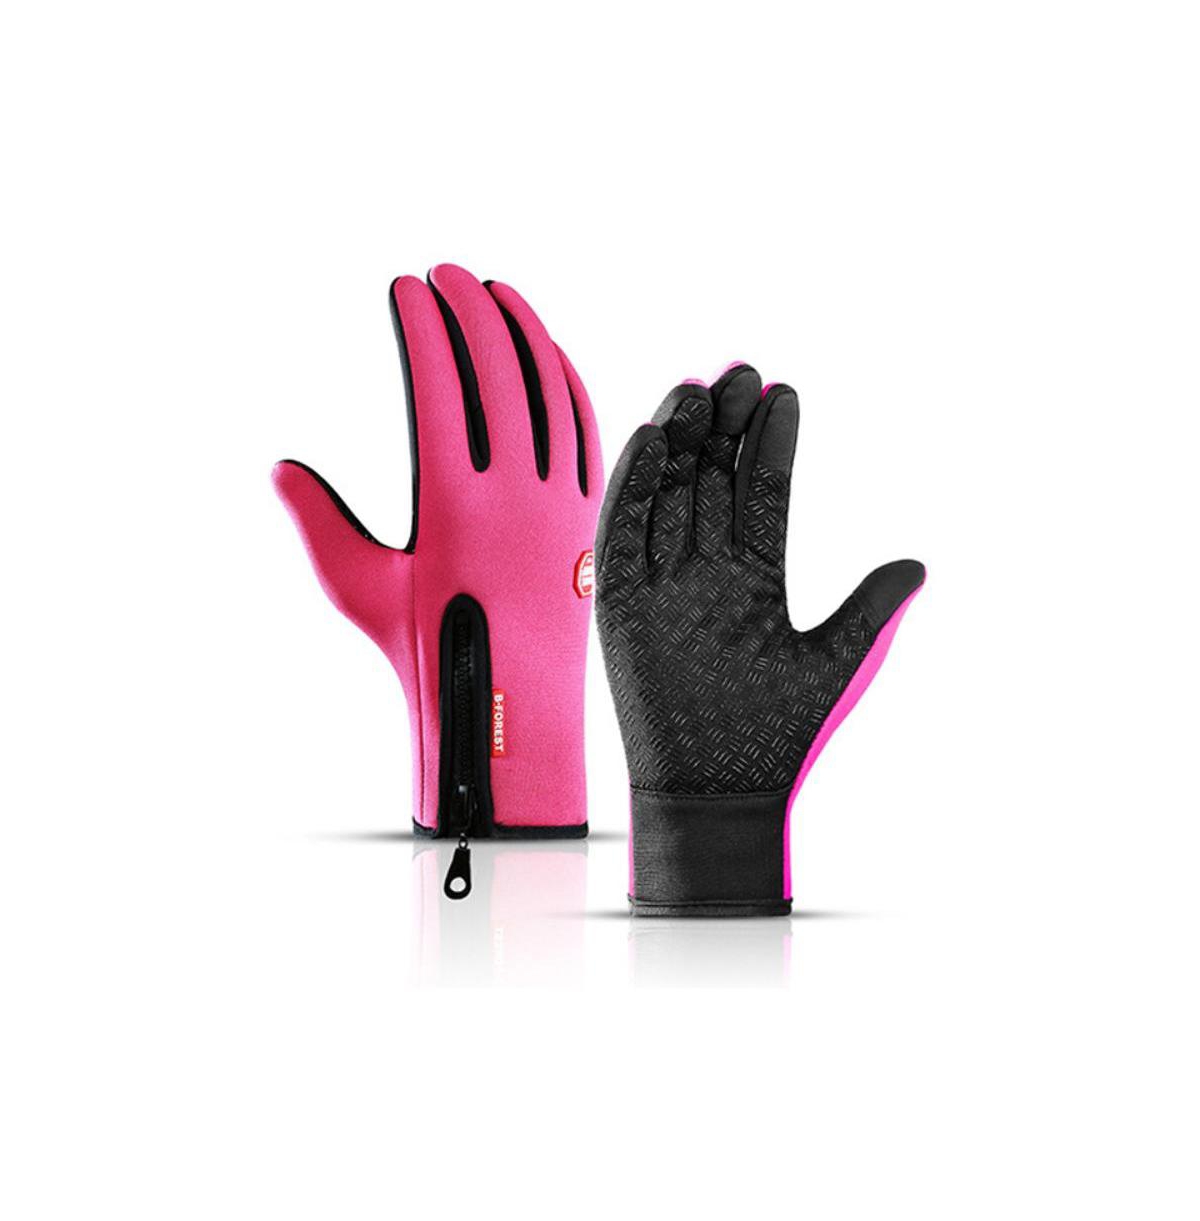 Men's Unisex Wind & Water Resistant Warm Touch Screen Tech Winter Gloves - Aqua